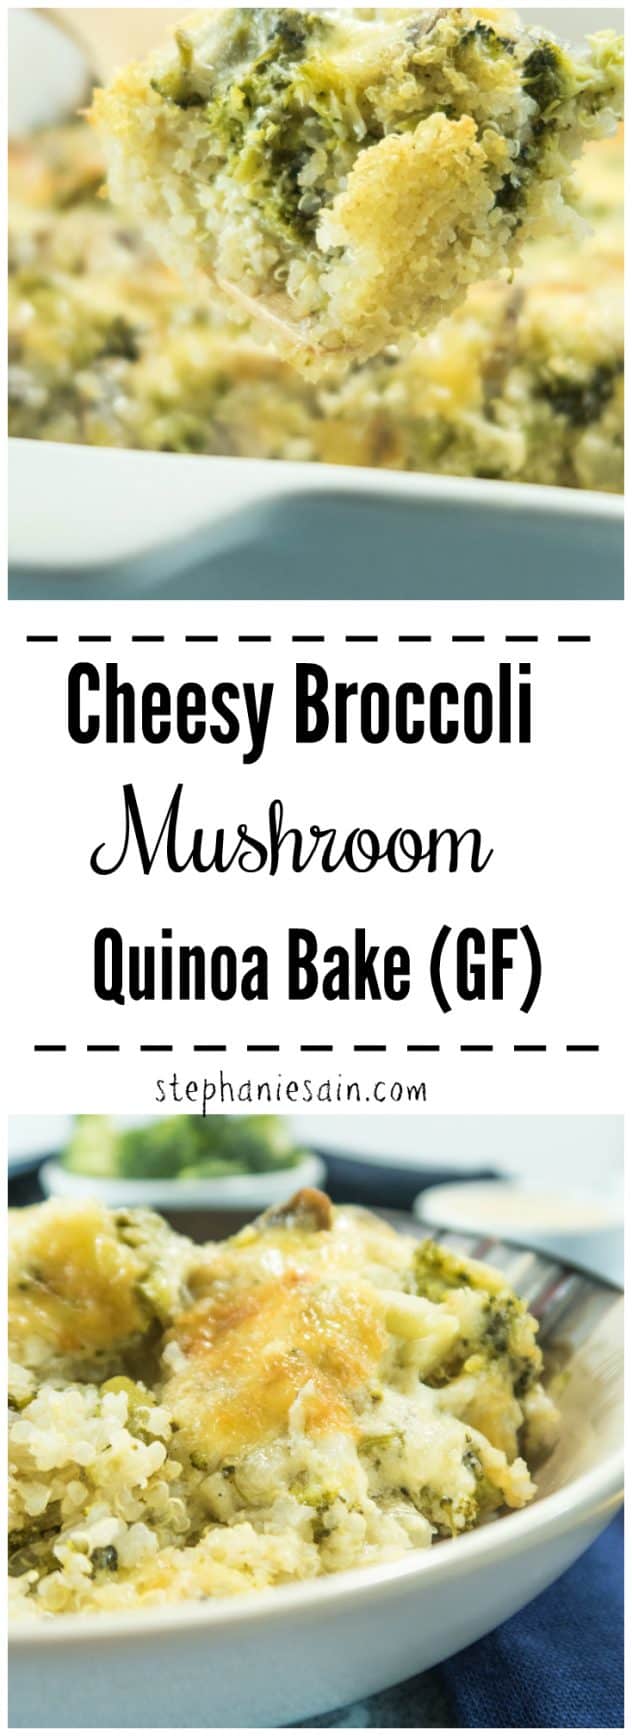 This Cheesy Broccoli Mushroom Quinoa Bake is chocked full of broccoli, mushrooms, cheese & quinoa. For a classic bowl of yummy comfort food with a health-ish twist. Gluten Free & Vegetarian.